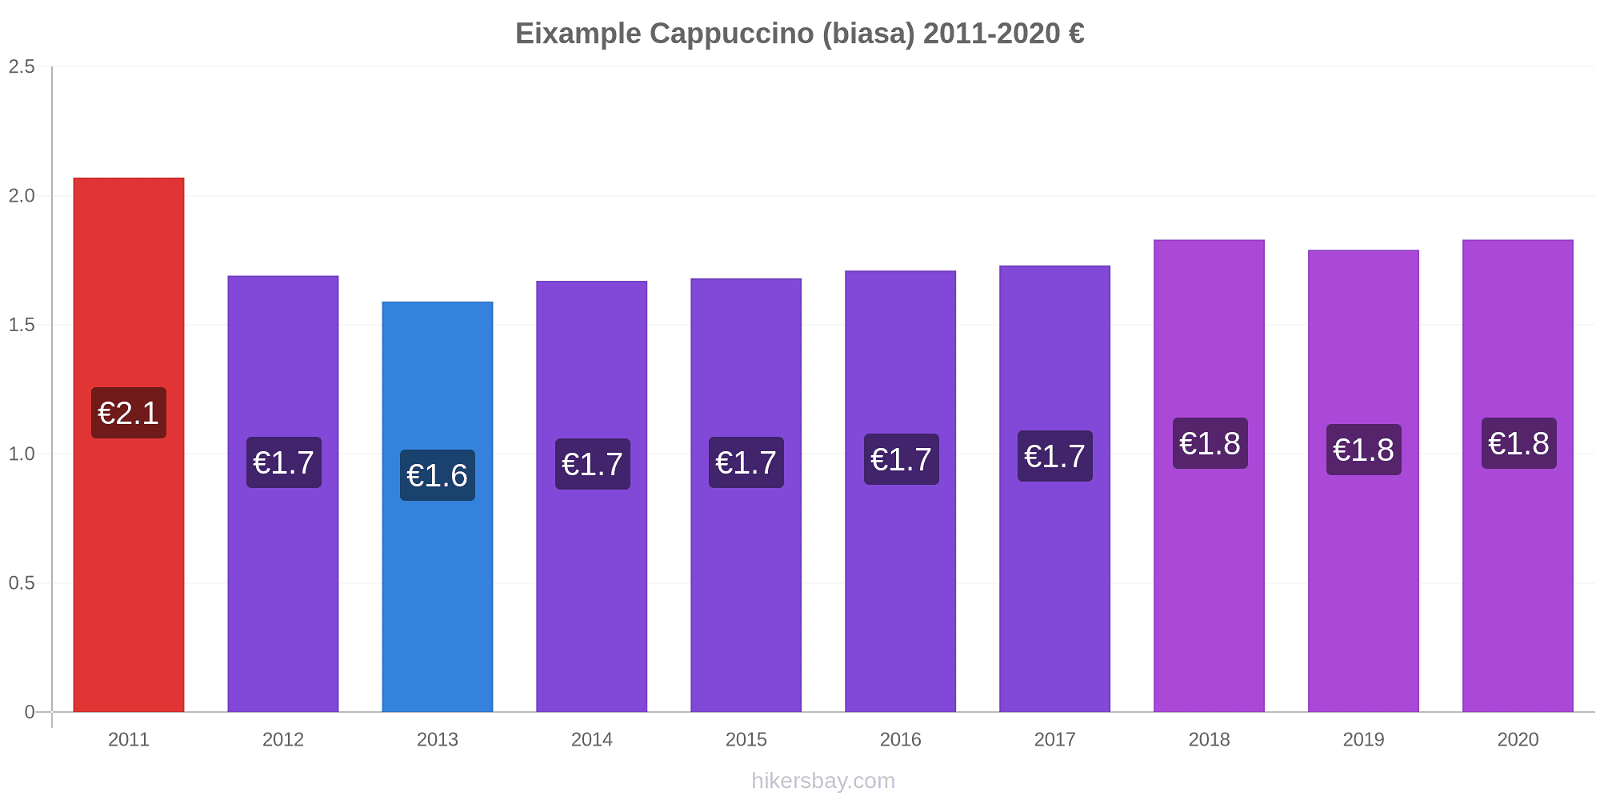 Eixample perubahan harga Cappuccino (biasa) hikersbay.com